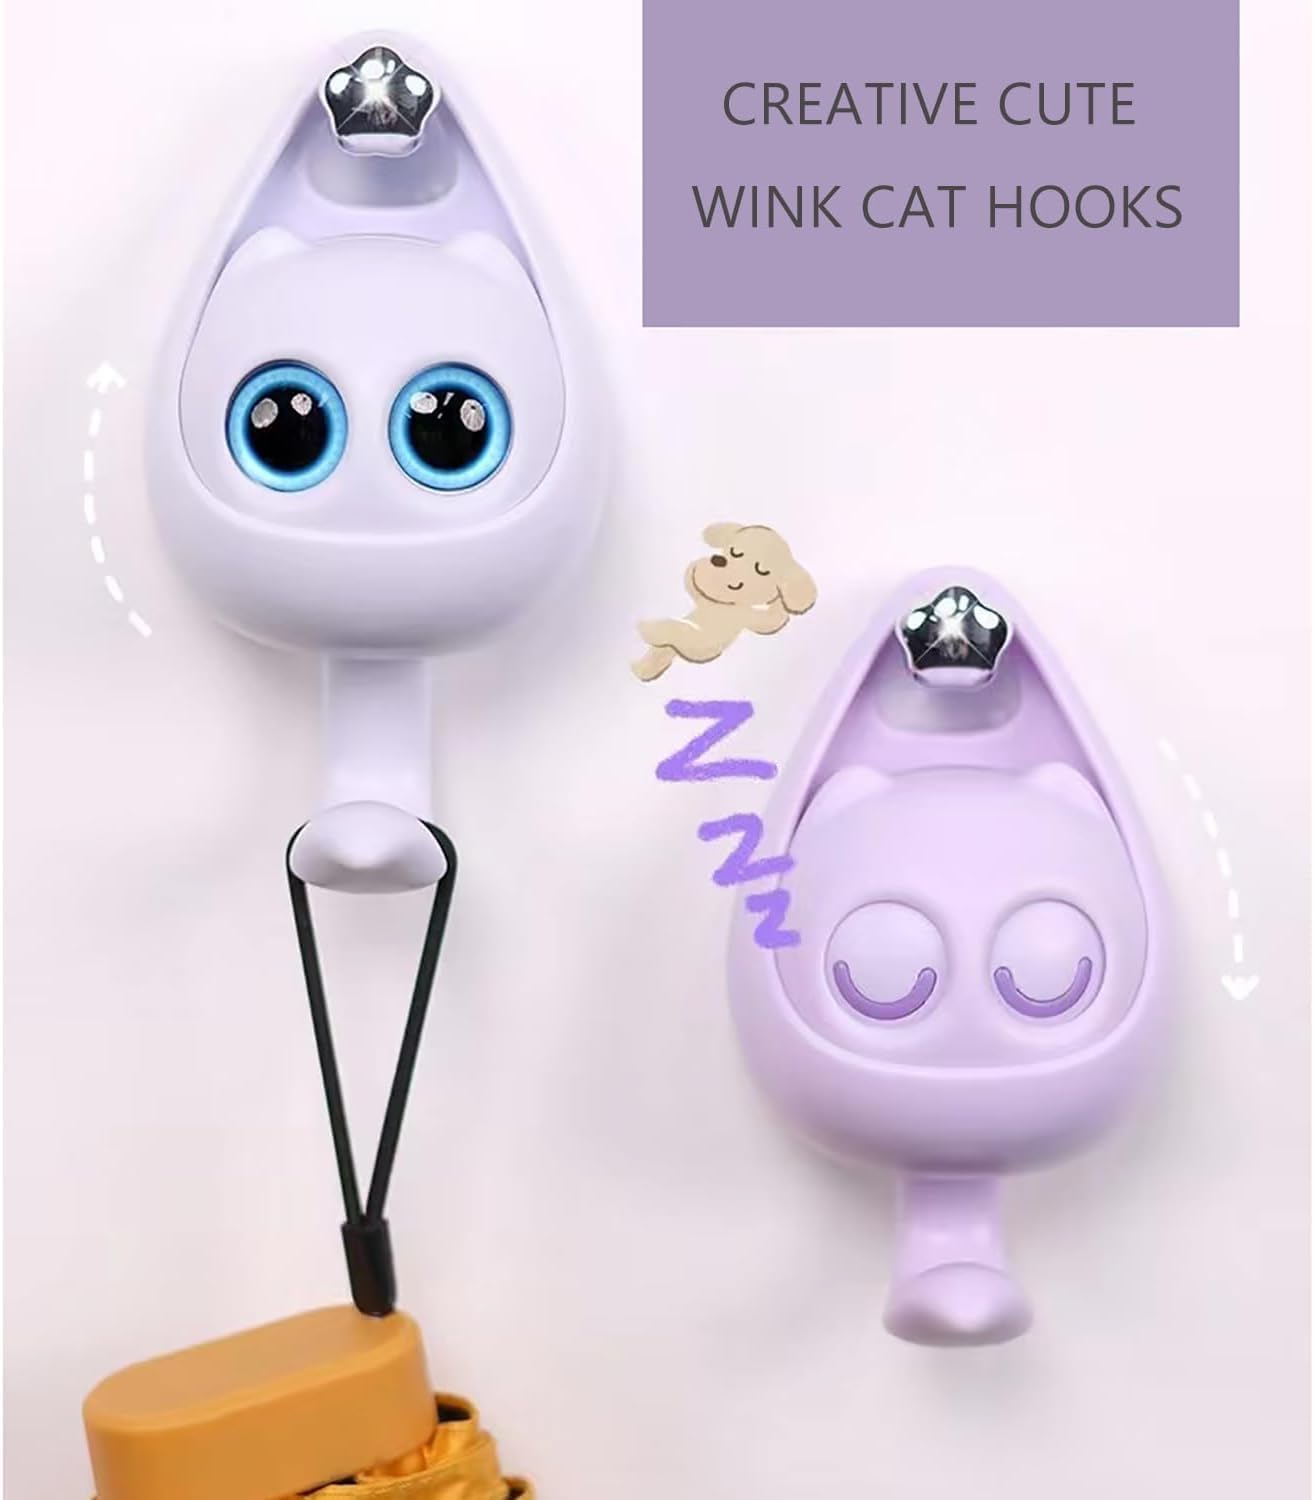 SkyShopy self Adhesive Coat Hook, Wink Cat Key Holder for Wall Cute Cat Hooks, Decorative Wall Hooks for Hanging Key, Towels, Scarf, Hats, Coat, Cloth, Bags, Cute Room Decor (1 Pcs)